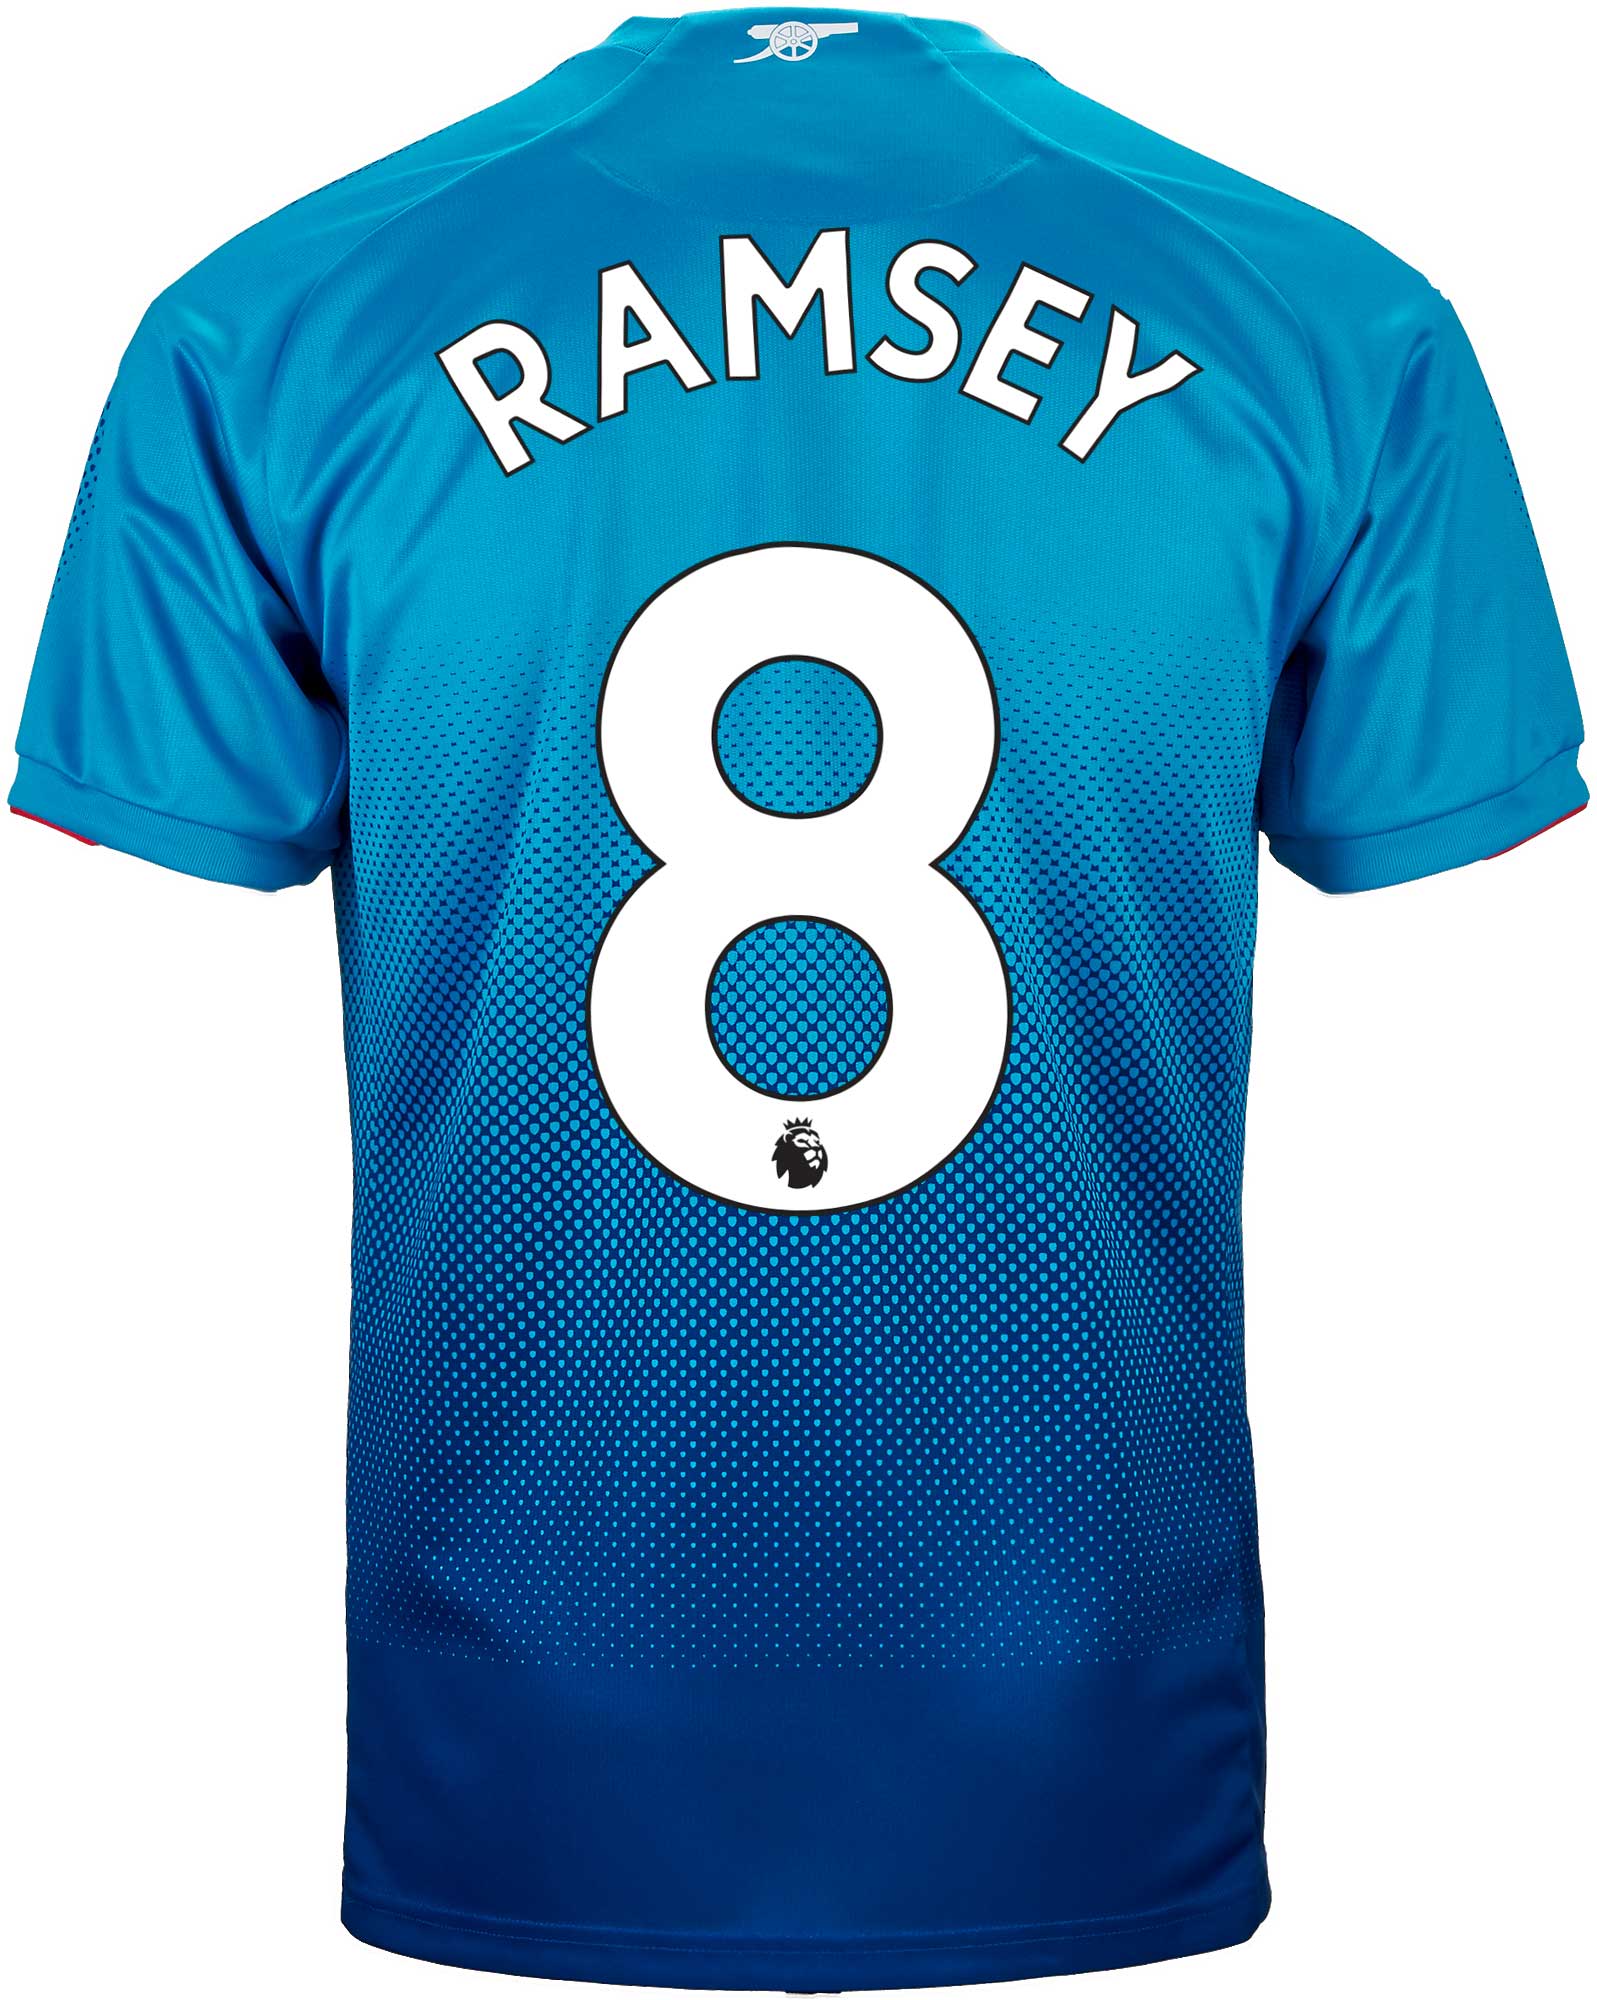 2017/18 Kids Puma Aaron Ramsey Arsenal 